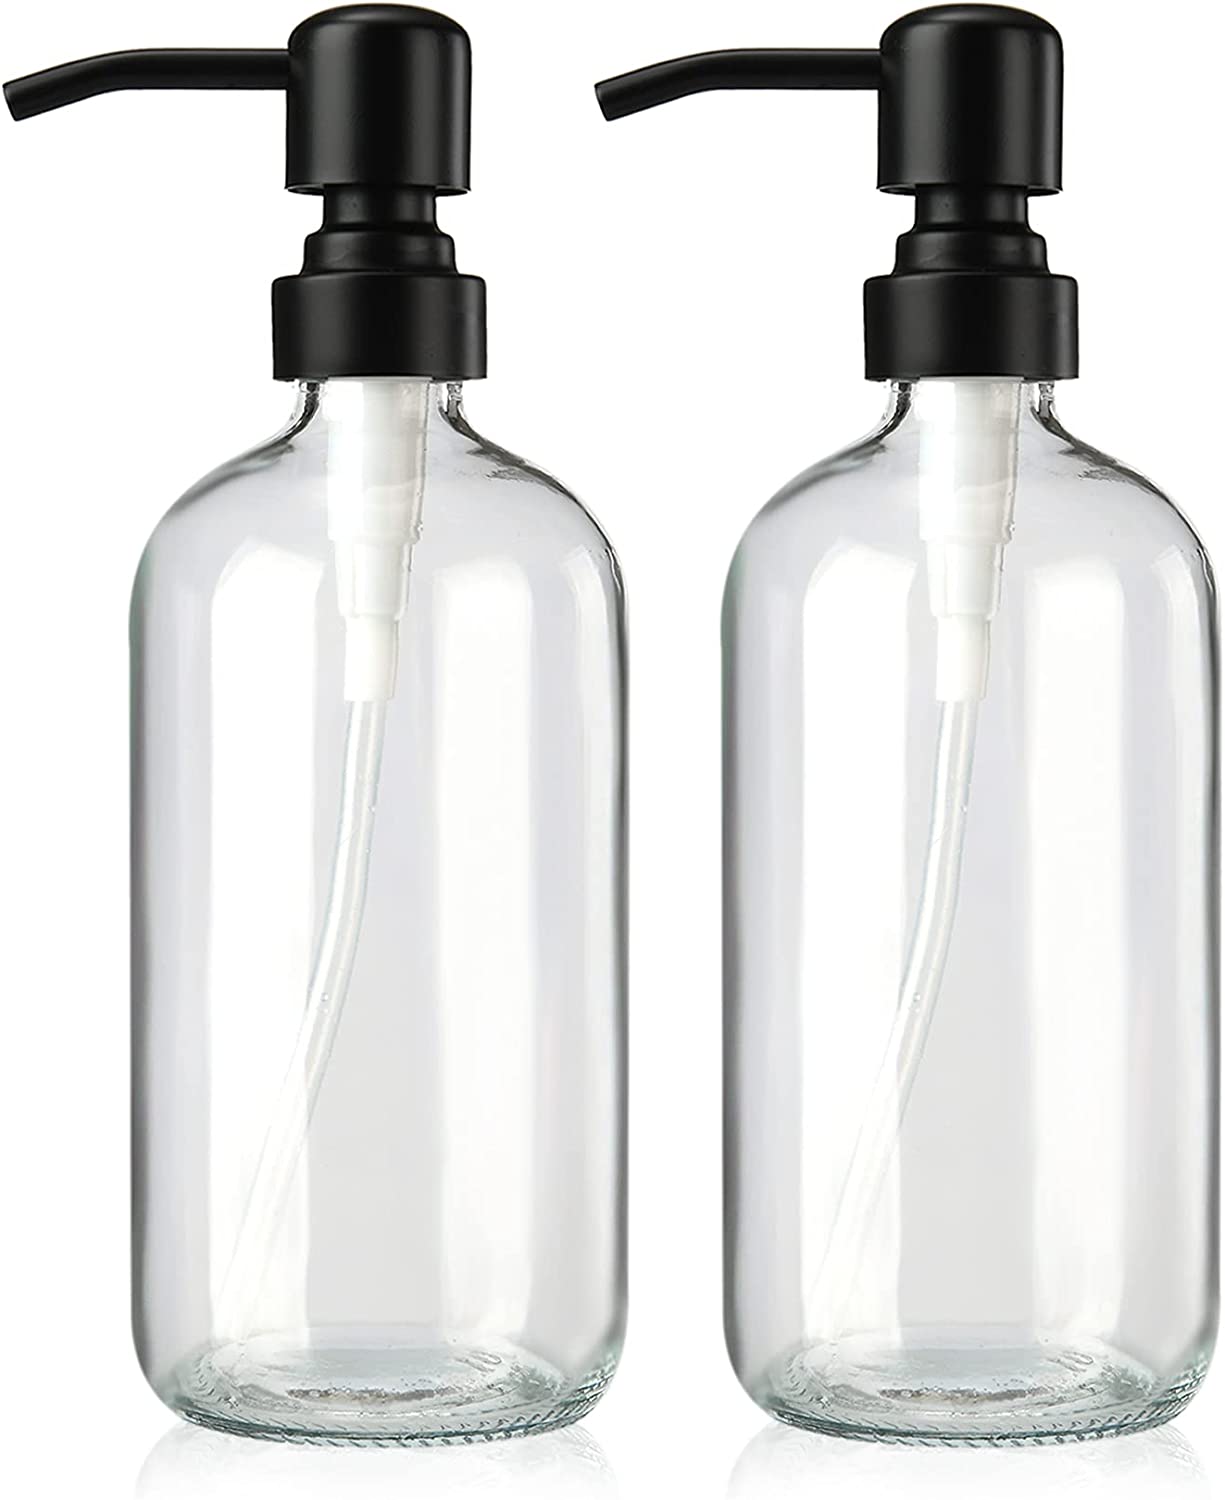 AmazerBath Traditional Lead-Free Soap Dispensers, 2-Pack